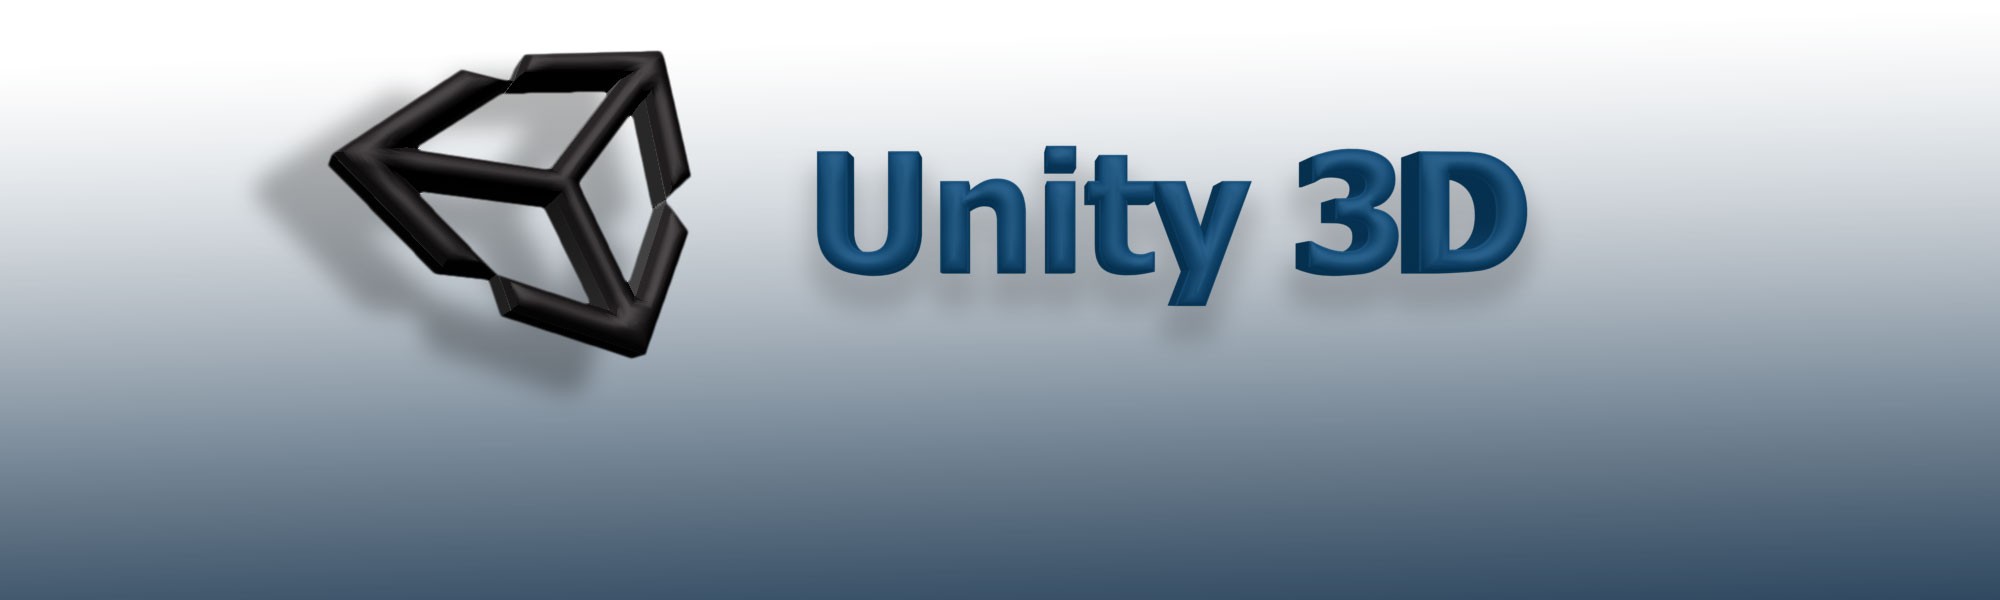 Unity 3D Developers